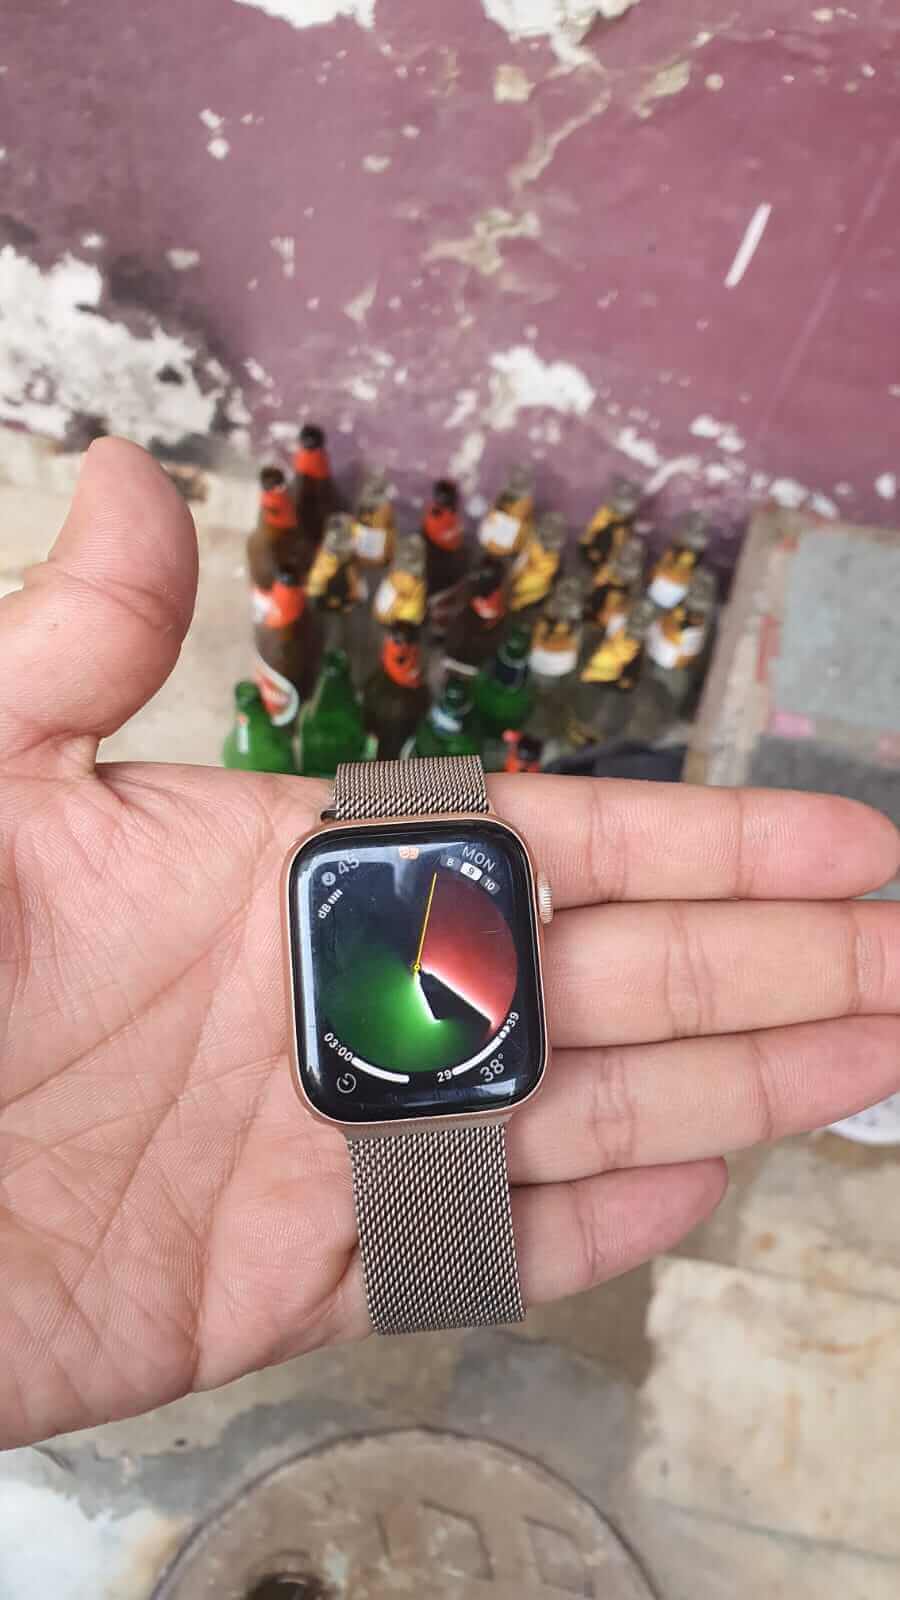 Does Apple Watch Work When Not On Wrist